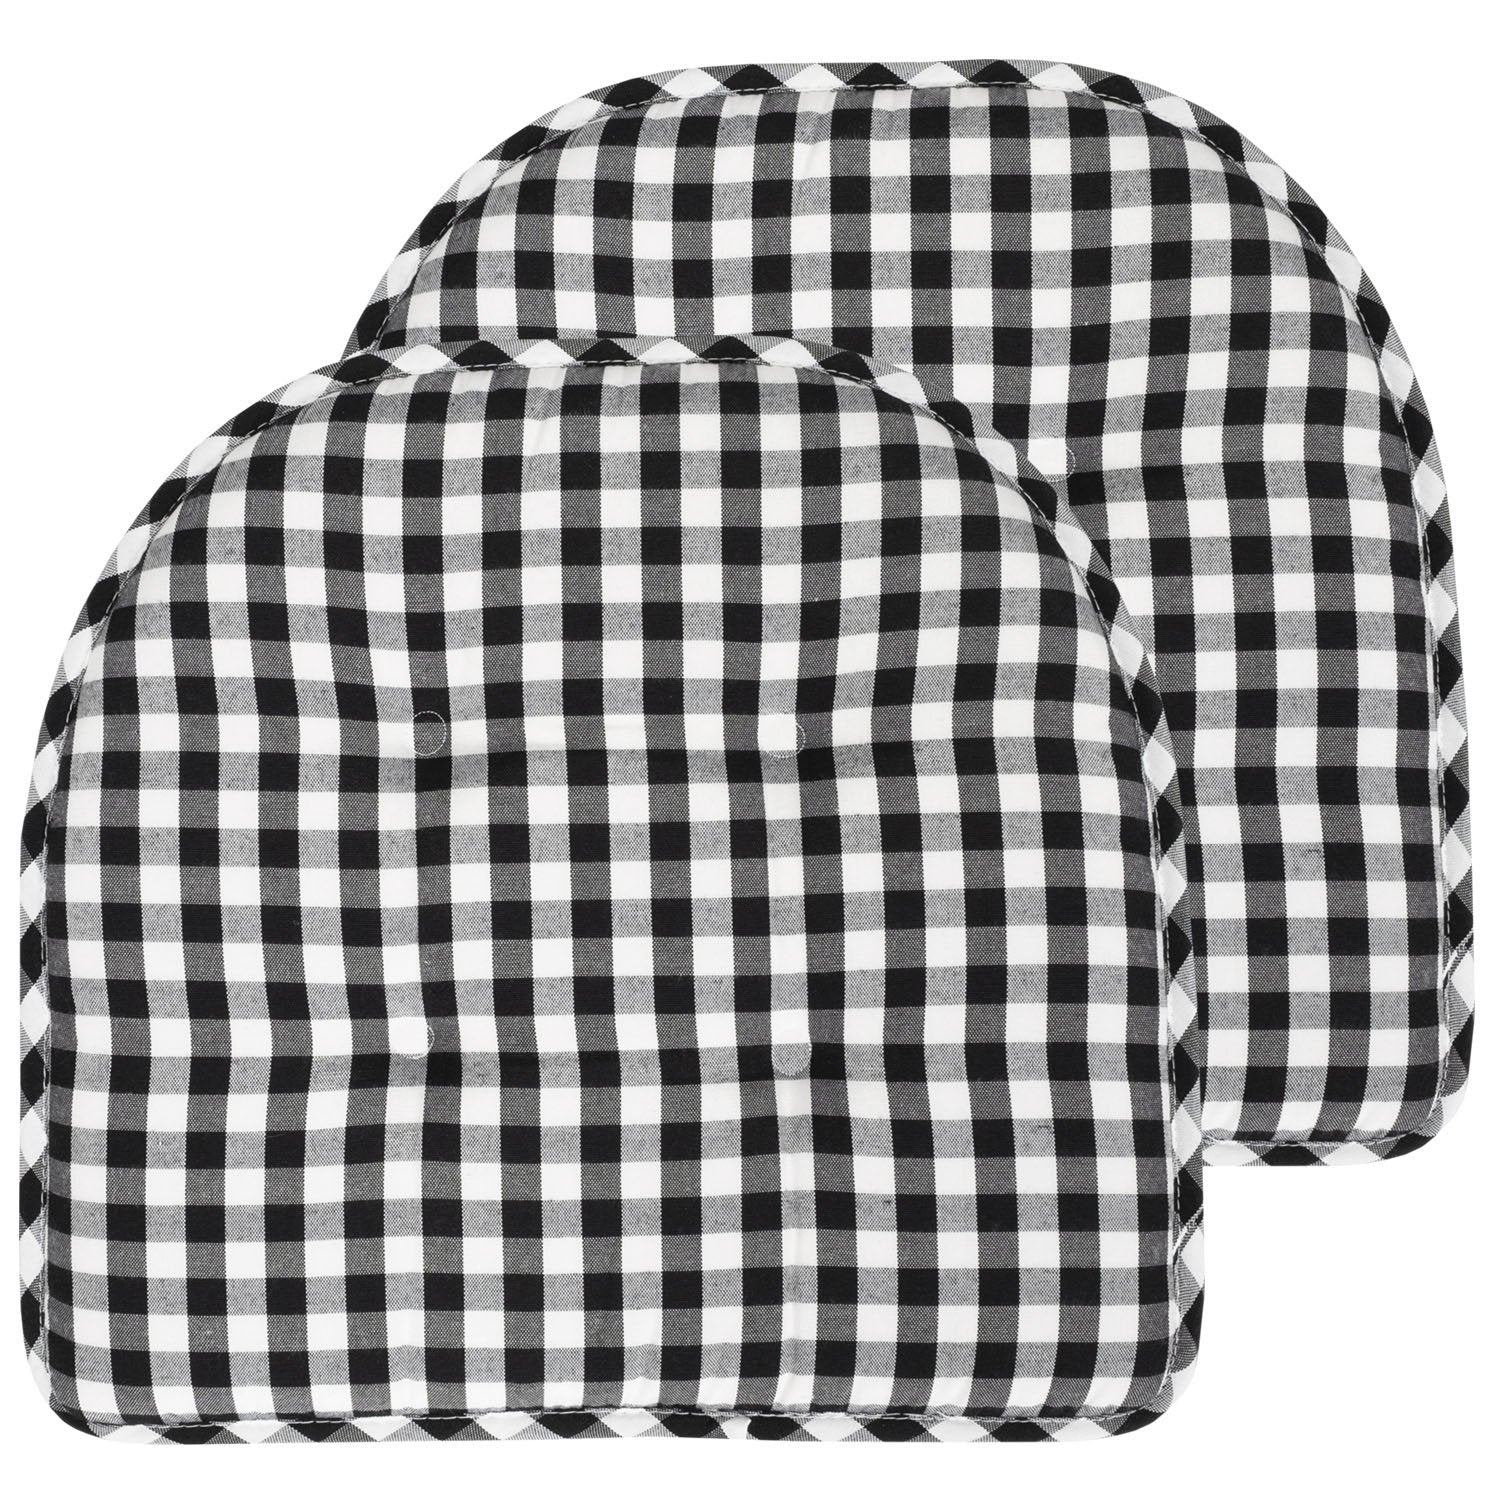 U Shape Chair Cushion Set Checkered Black White 2-Pack